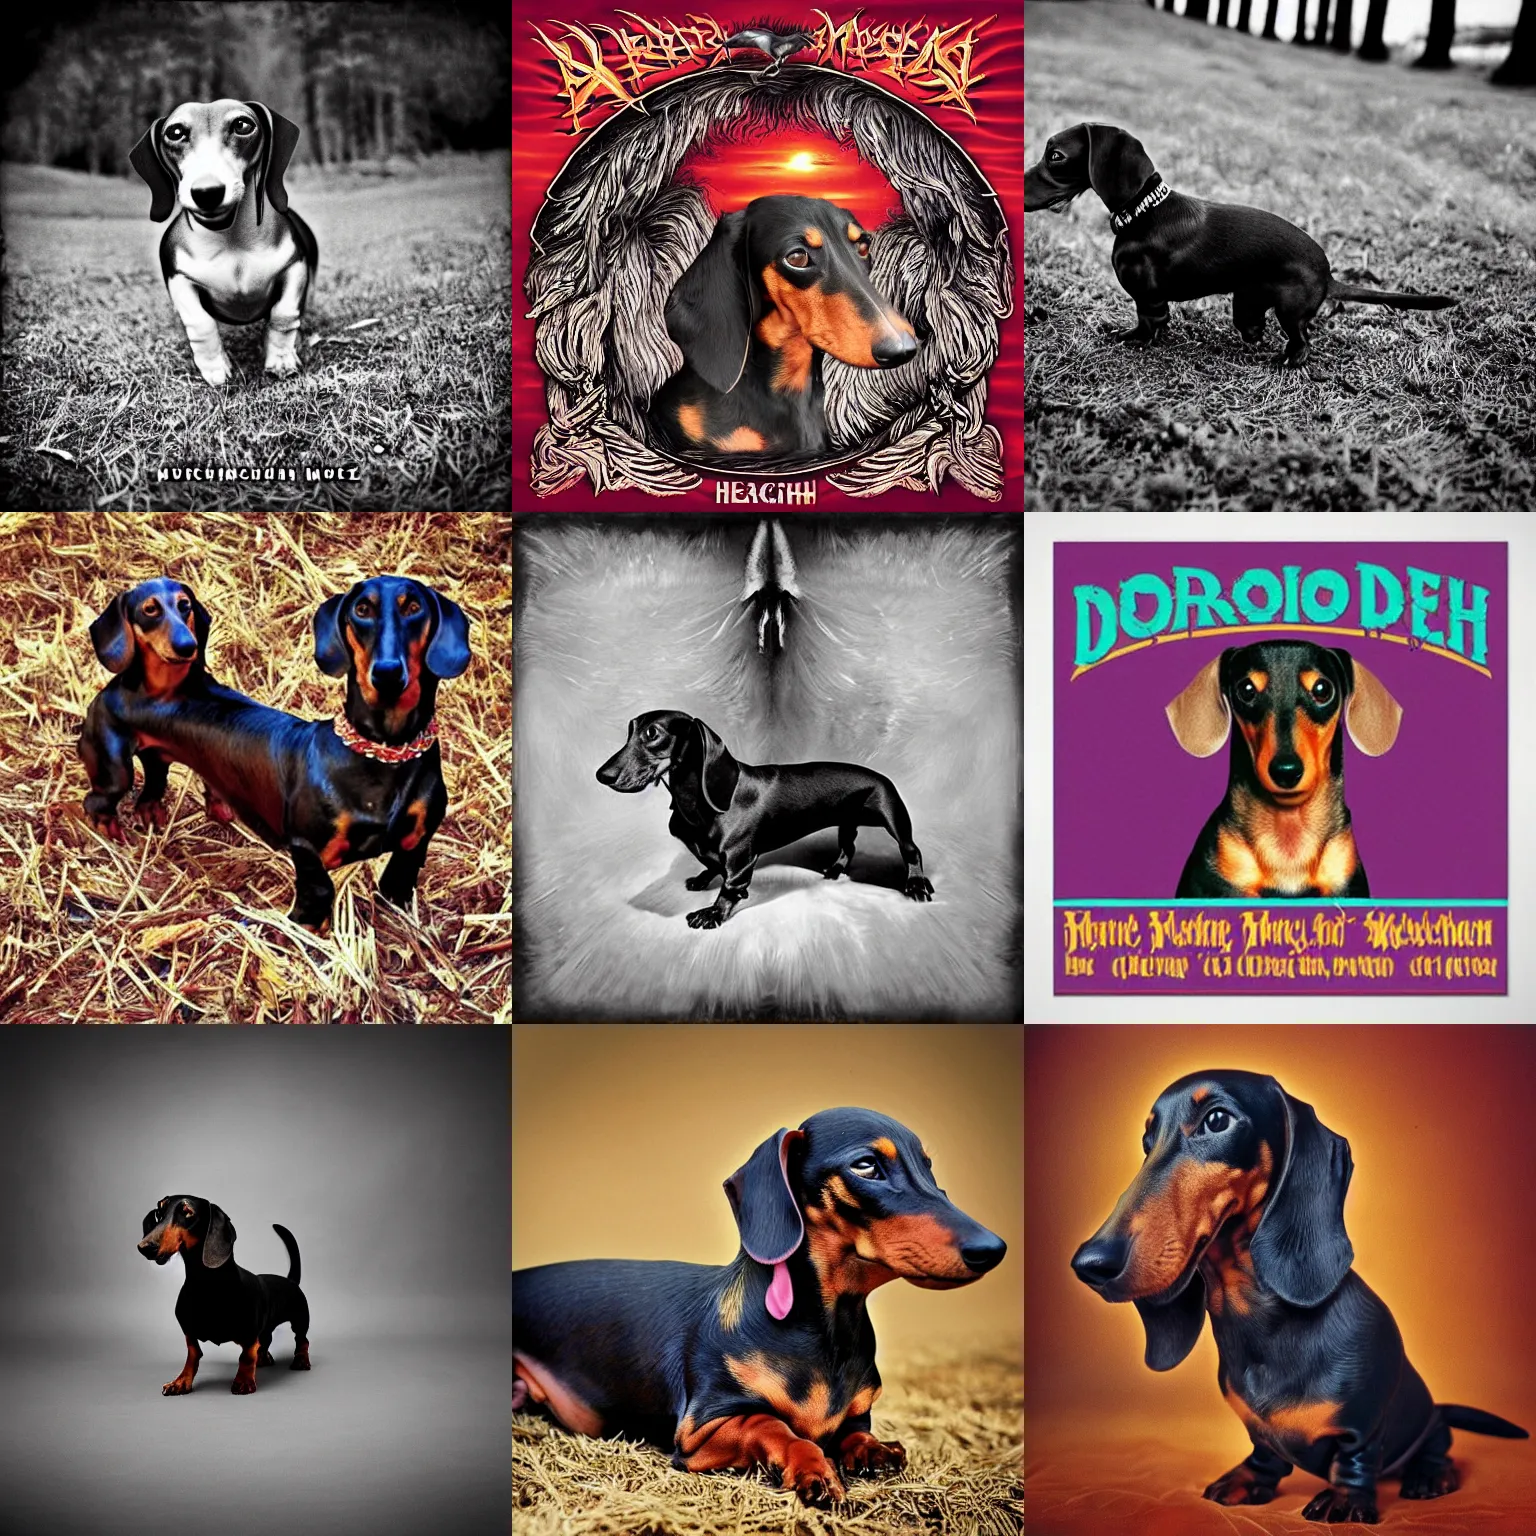 Prompt: dachshund death metal album cover, photo